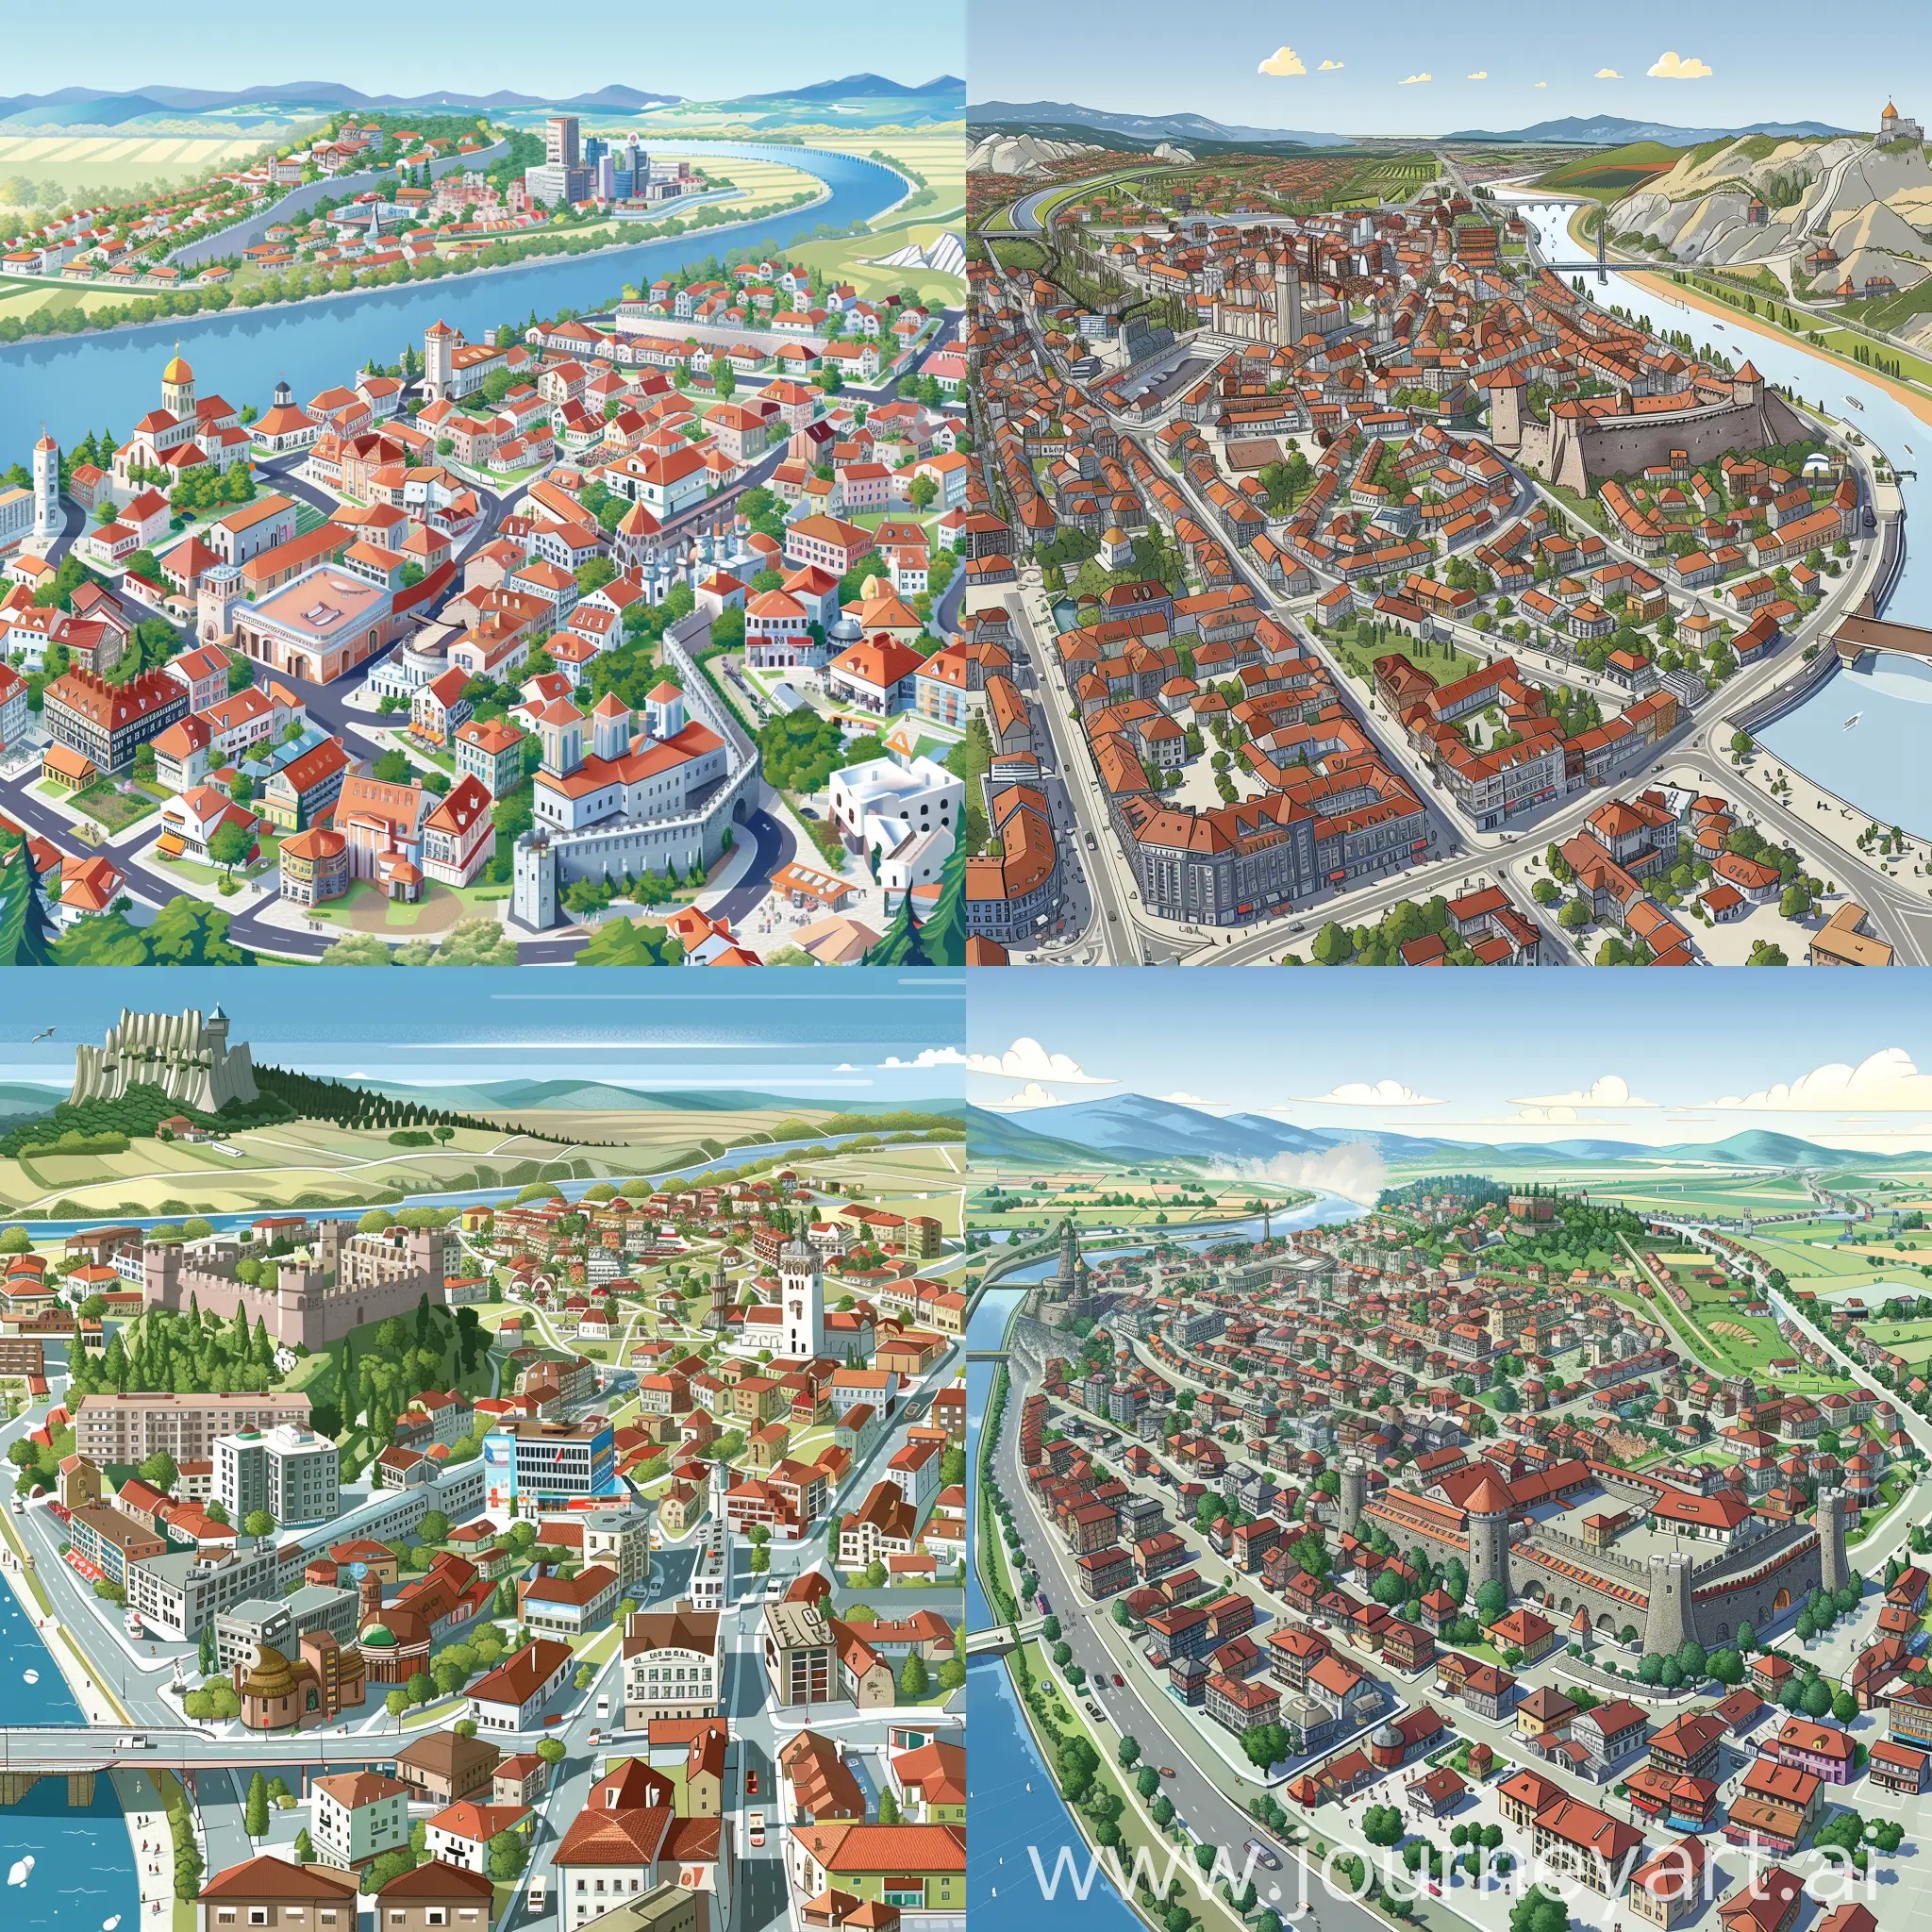 Serbian-Cartoon-City-Blueprint-Historical-and-Modern-Urban-Landscape-of-Nis